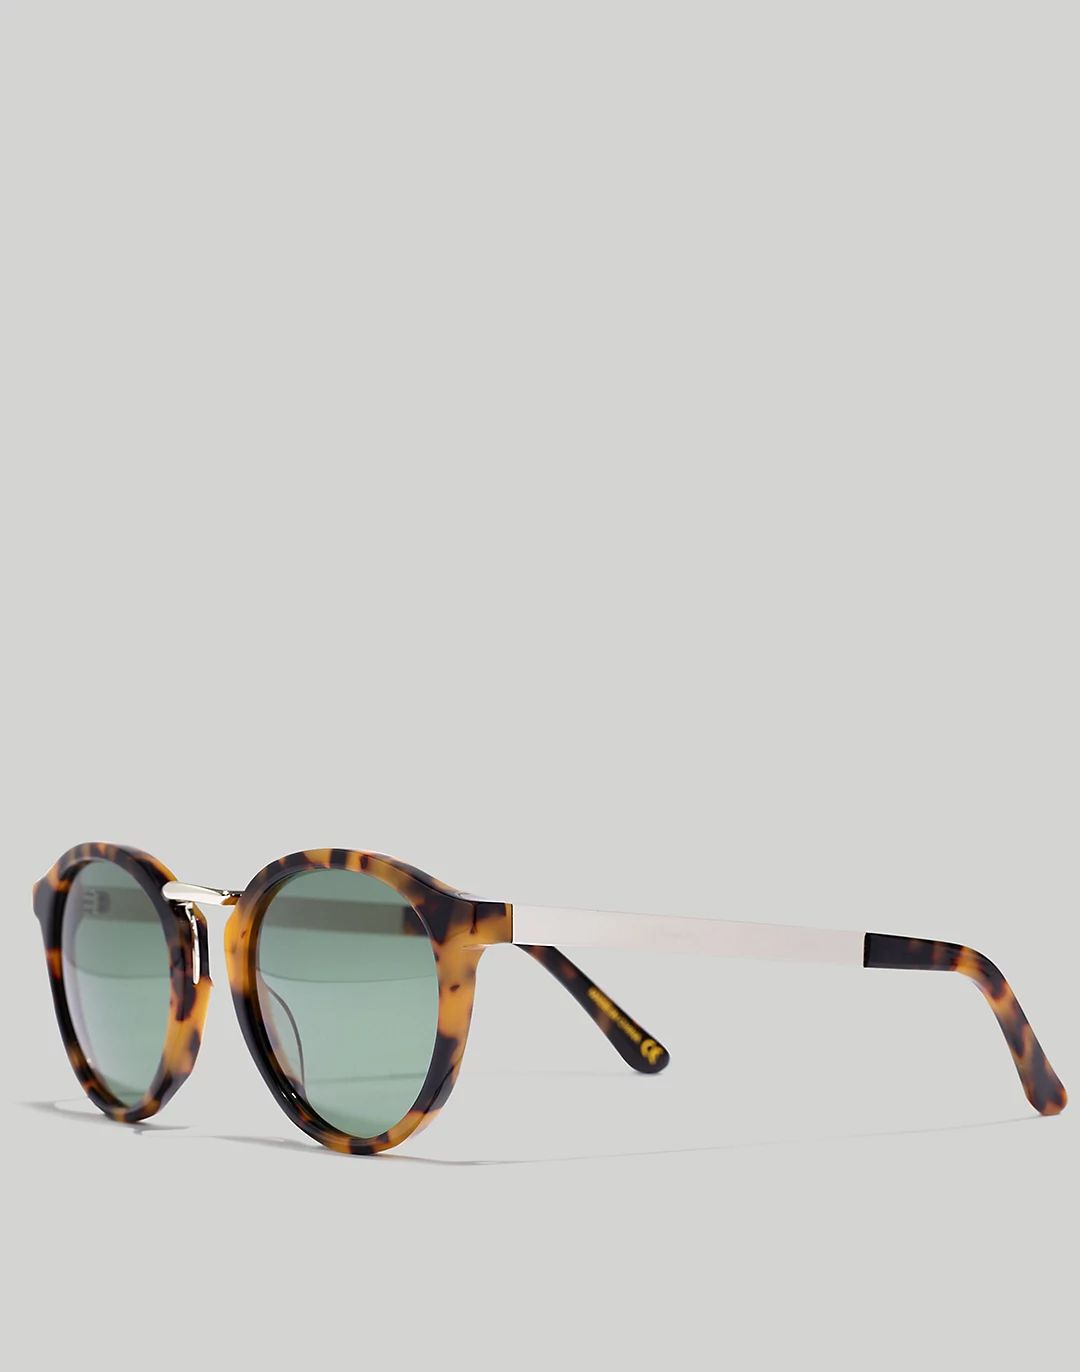 Indio Sunglasses | Madewell